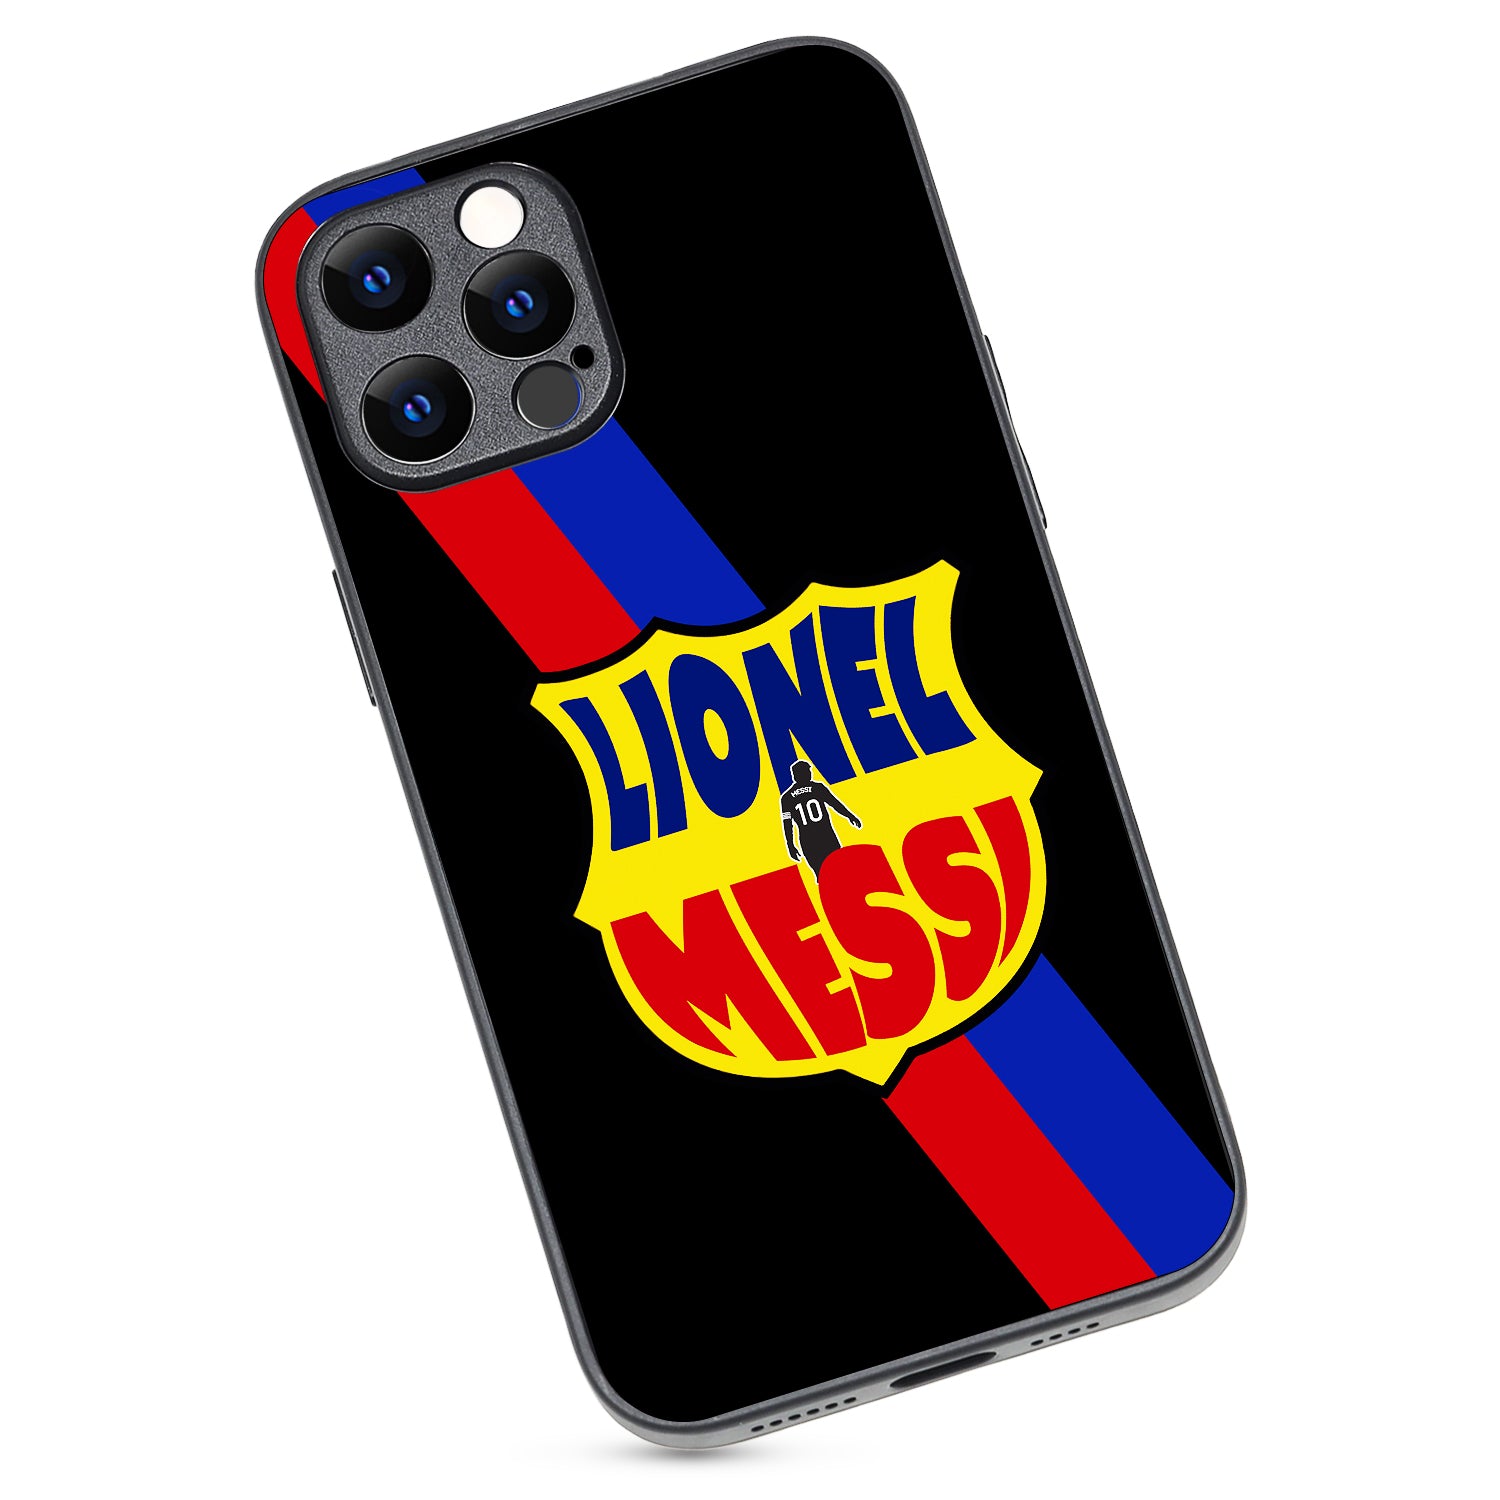 Lionel Messi Sports iPhone 12 Pro Max Case